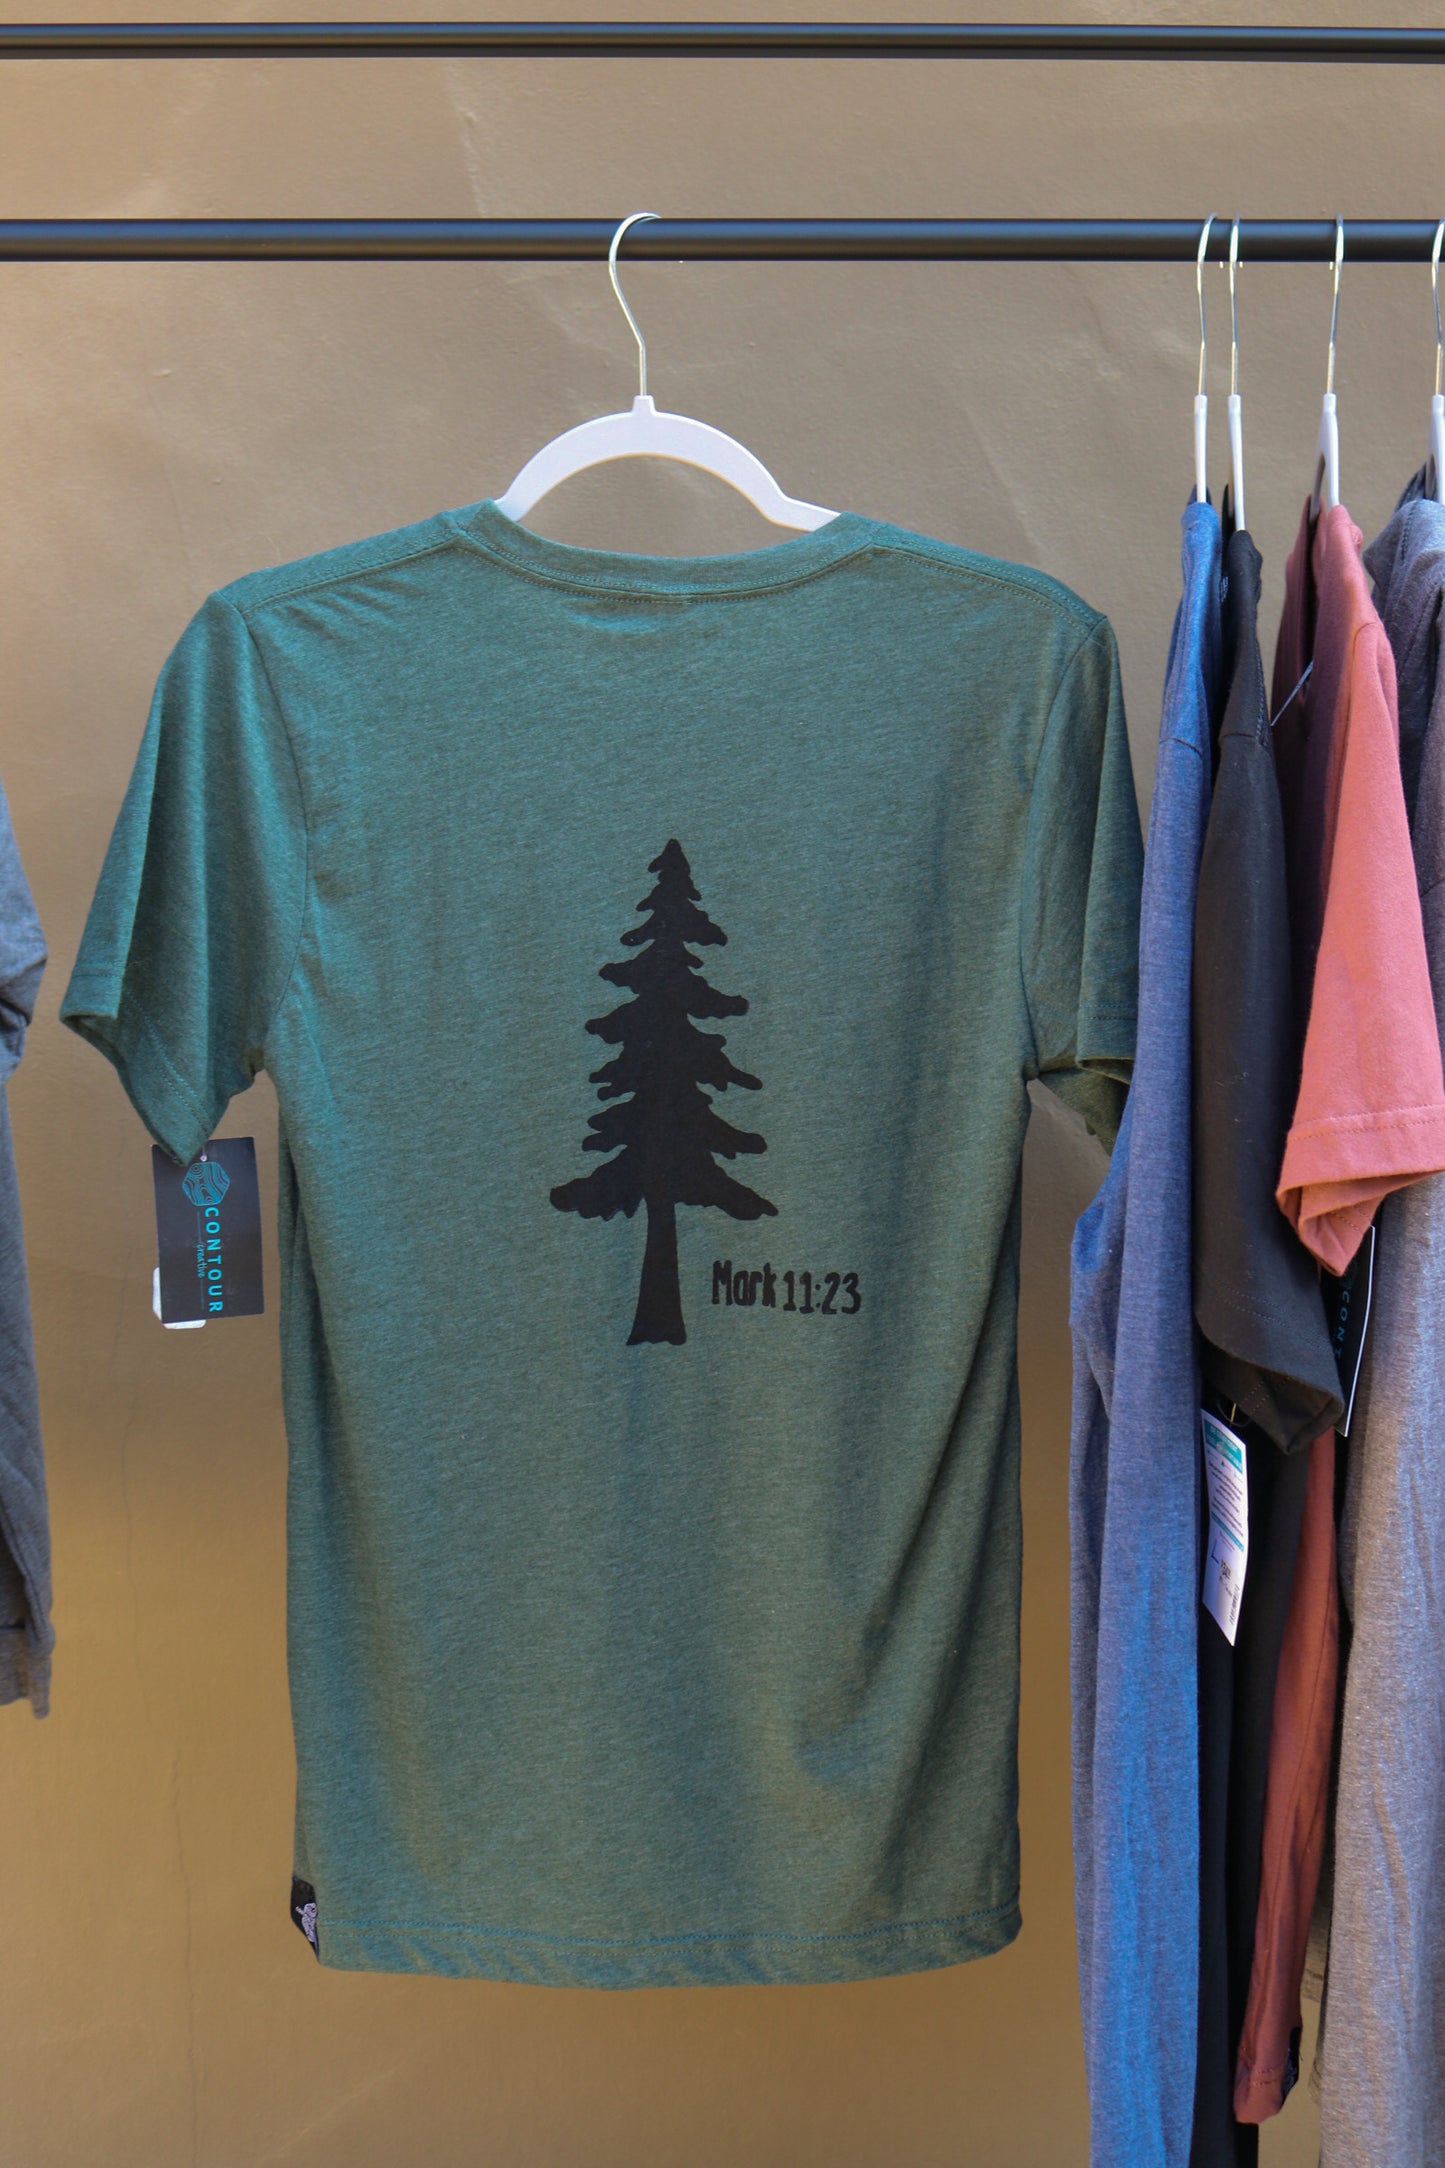 Single Tree and Mountain Scene T-Shirt